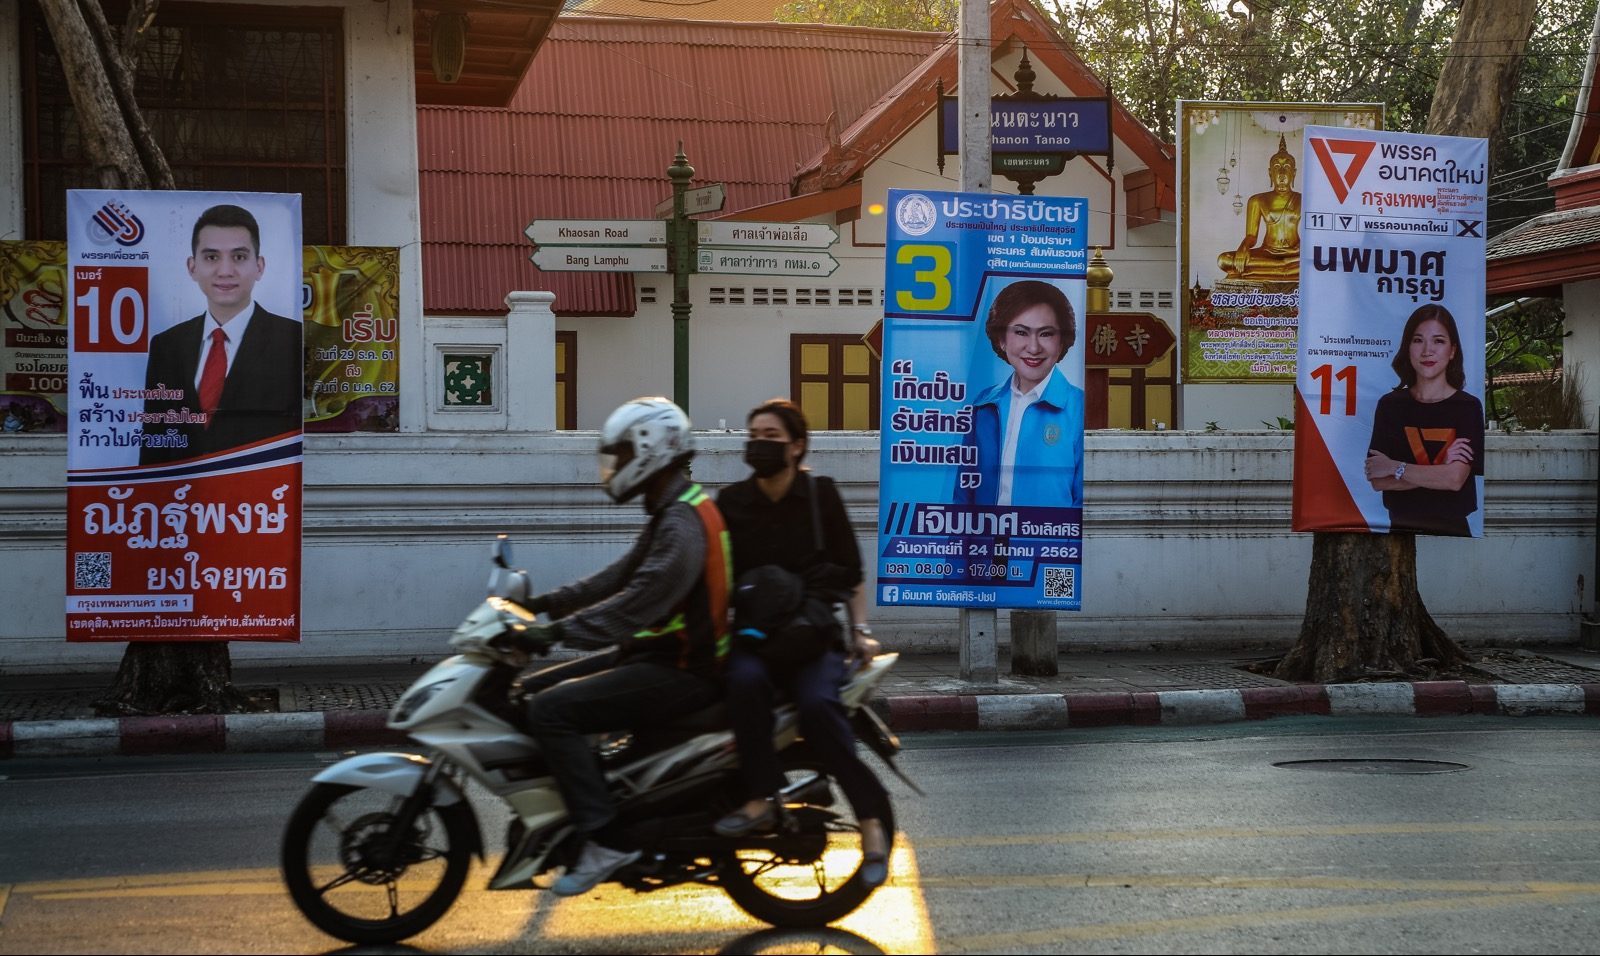 Thailand 2019 Election - New Naratif